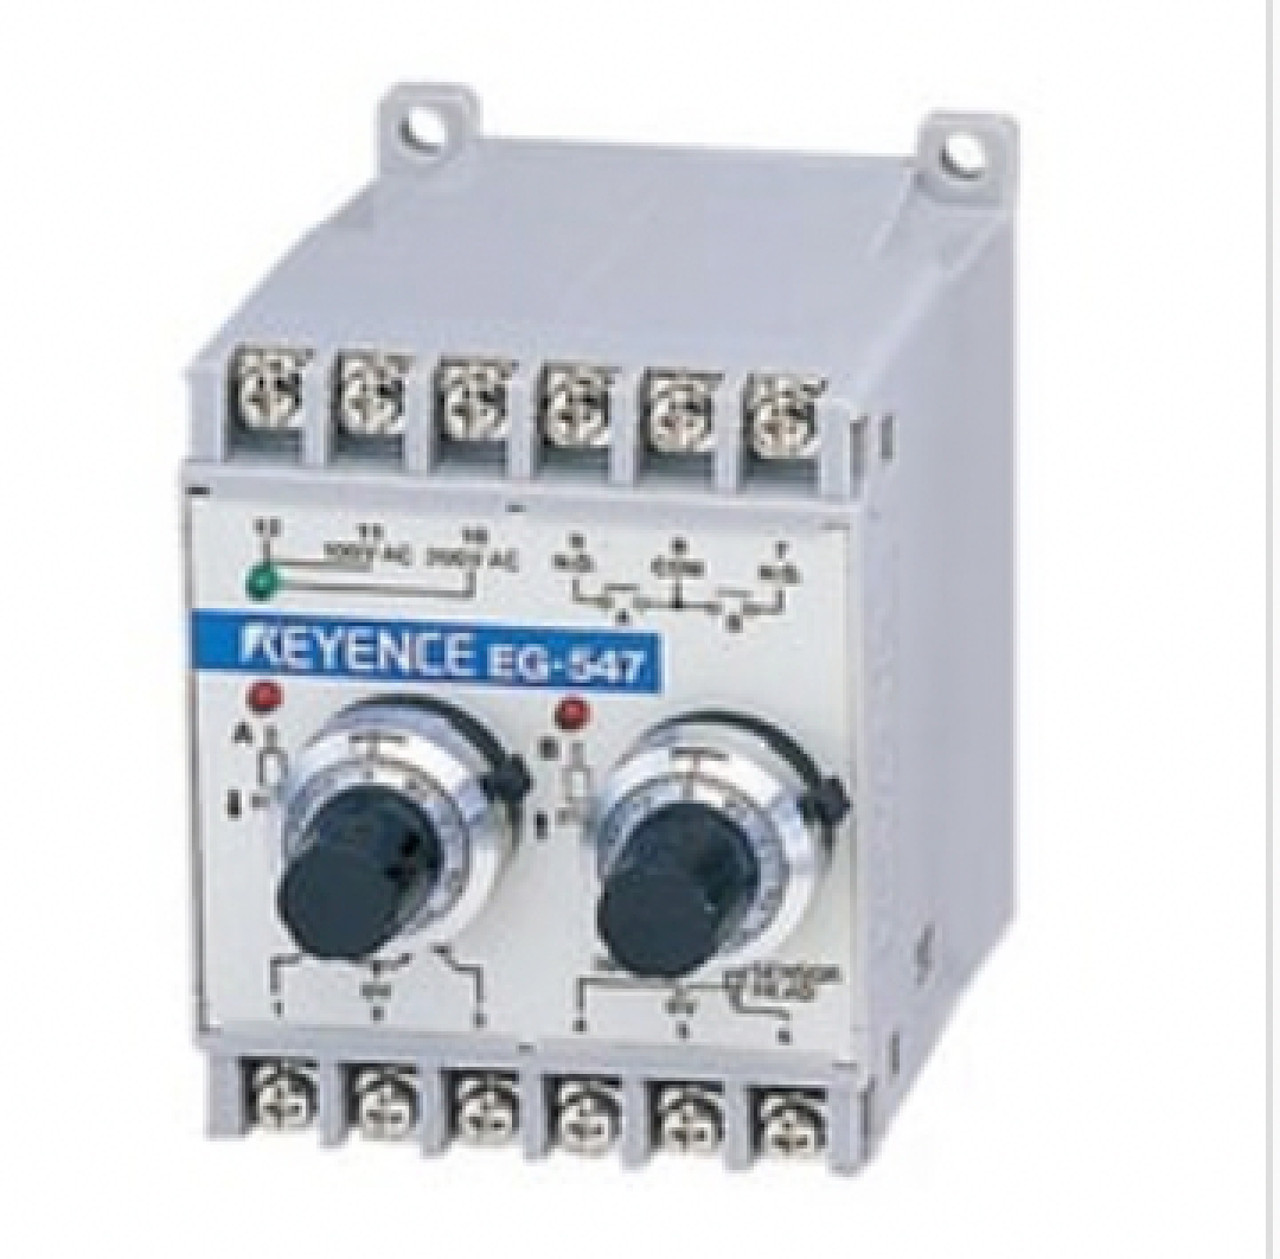 Keyence EG-547 Inductive Proximity Displacement Sensor Amplifier Unit [New]